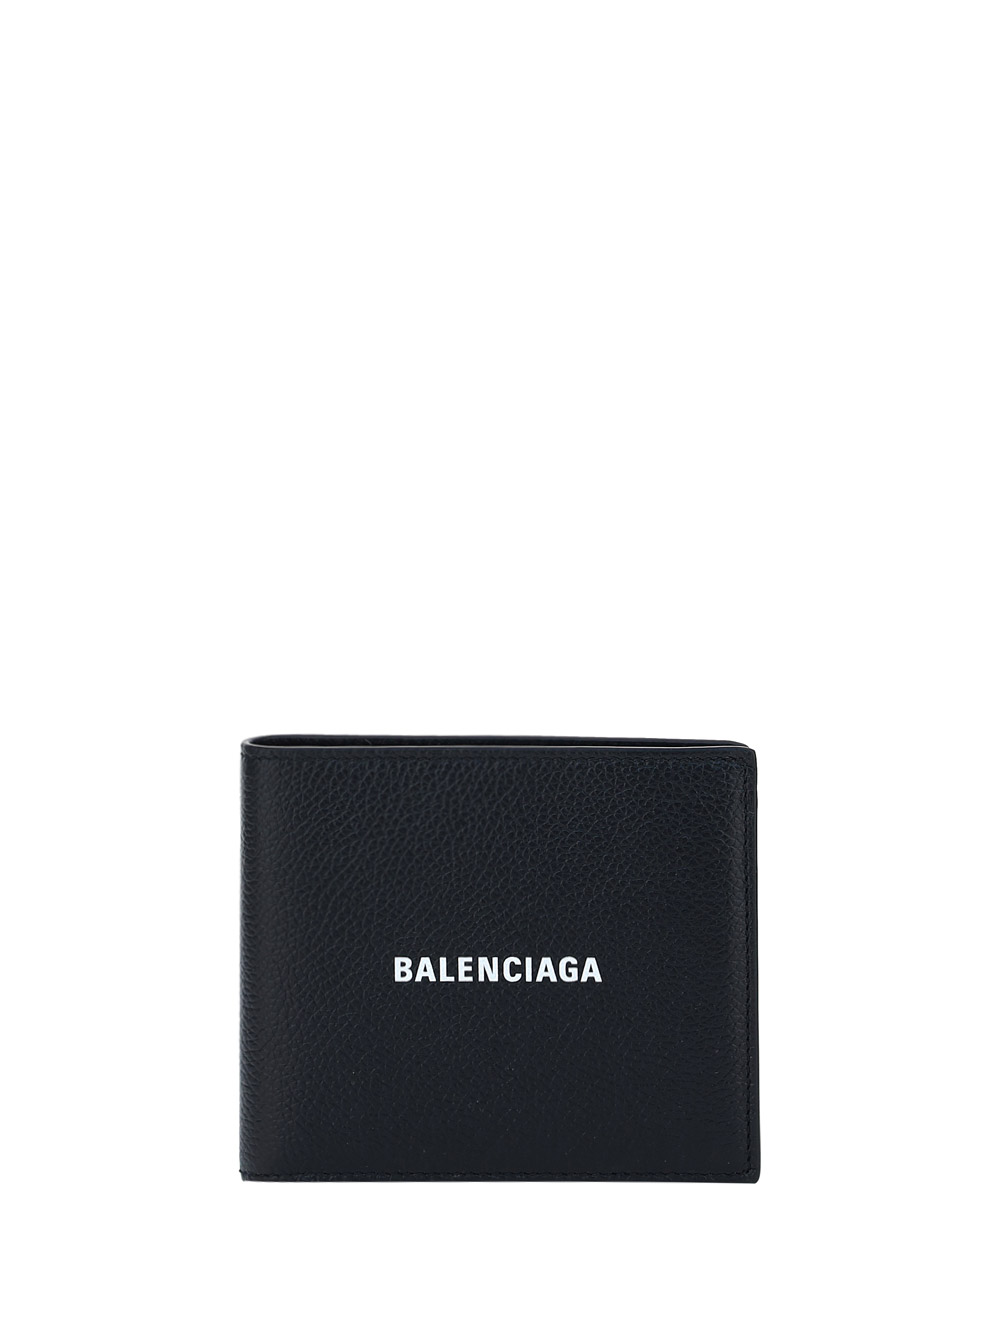 Balenciaga Wallet In Black/l White